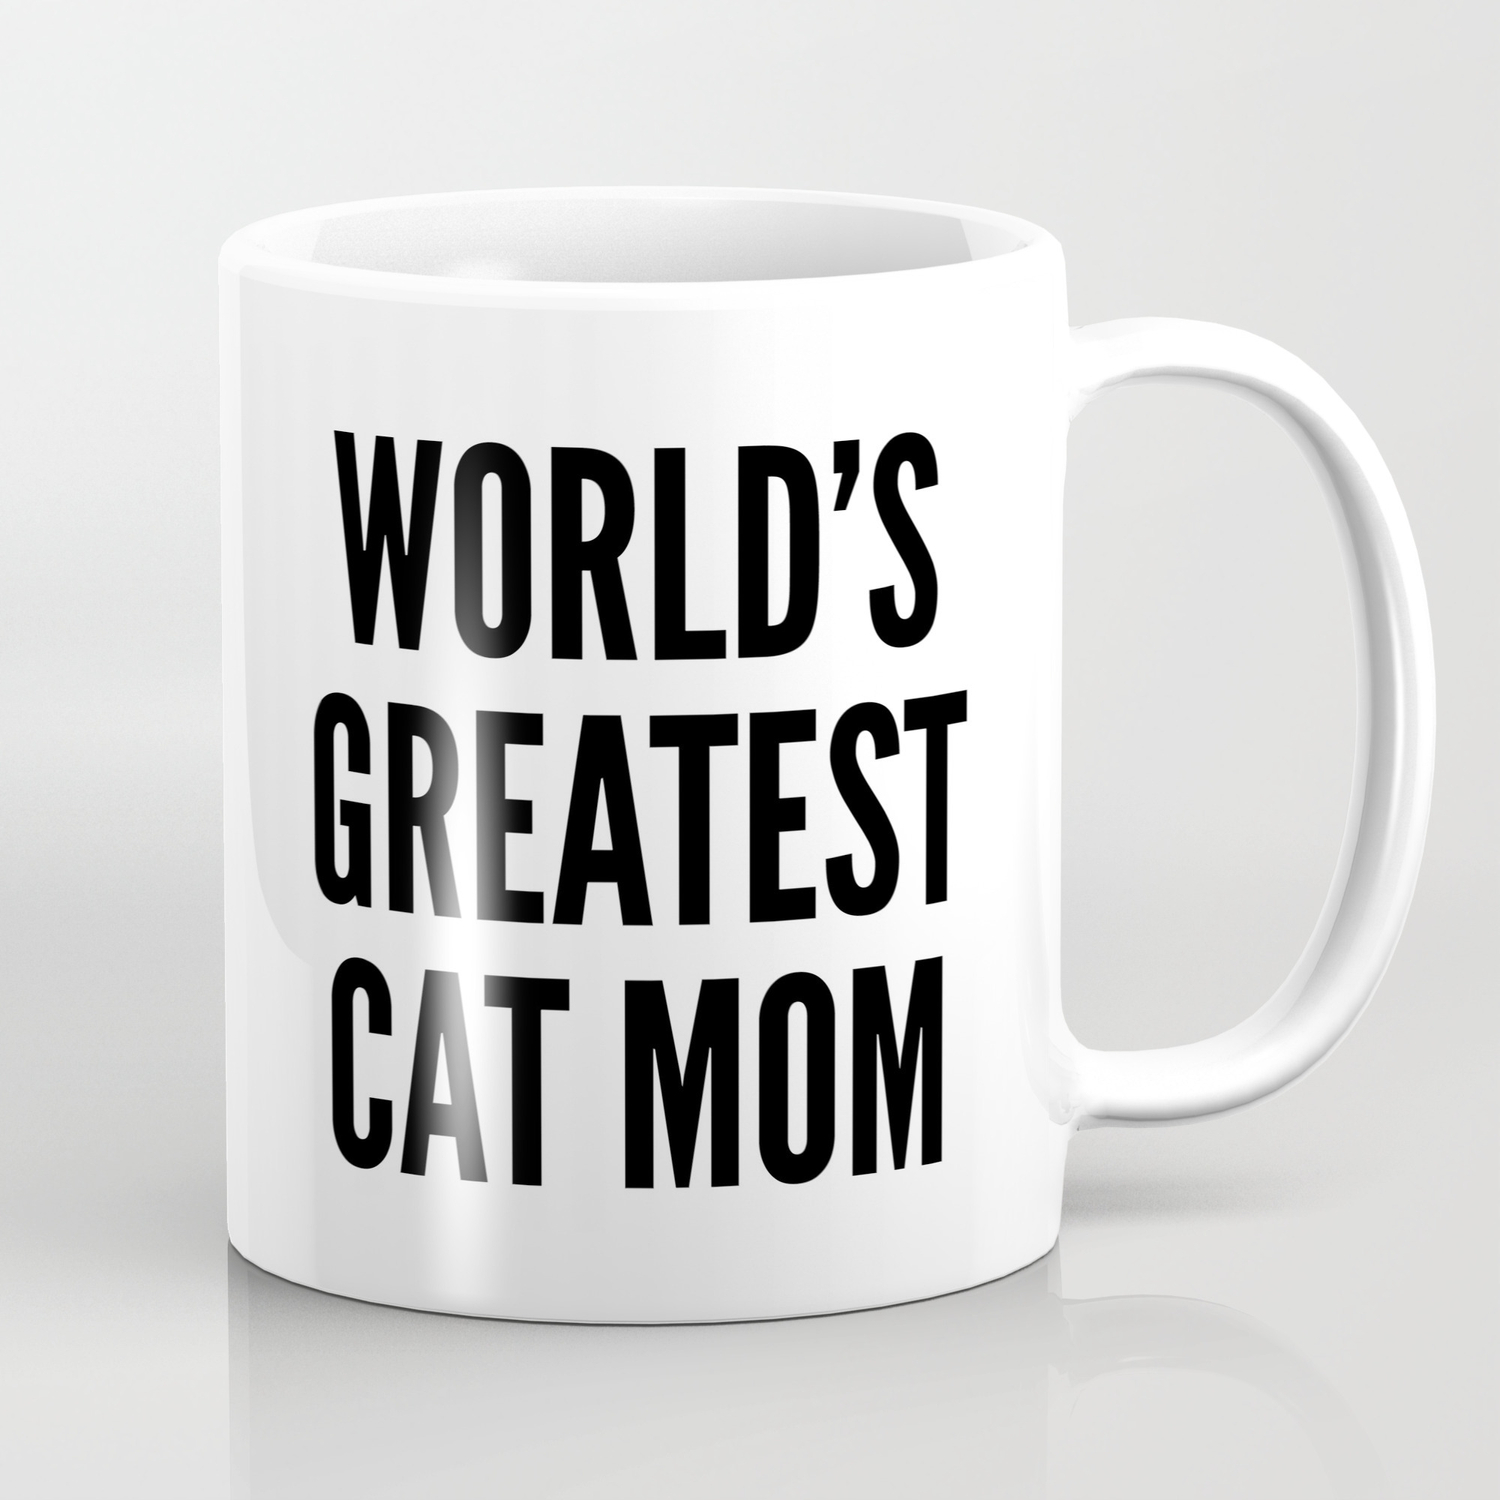 cat mom cup